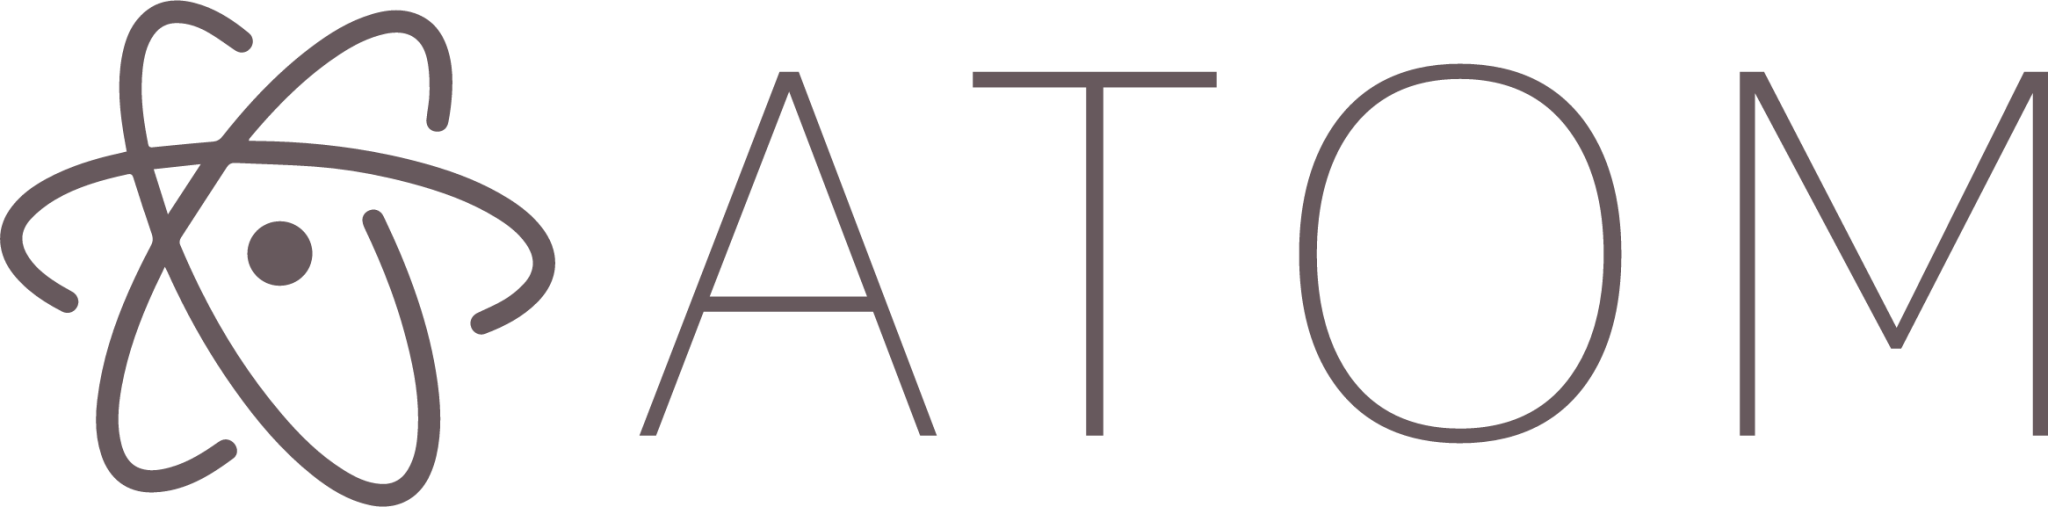 atom original wordmark icon